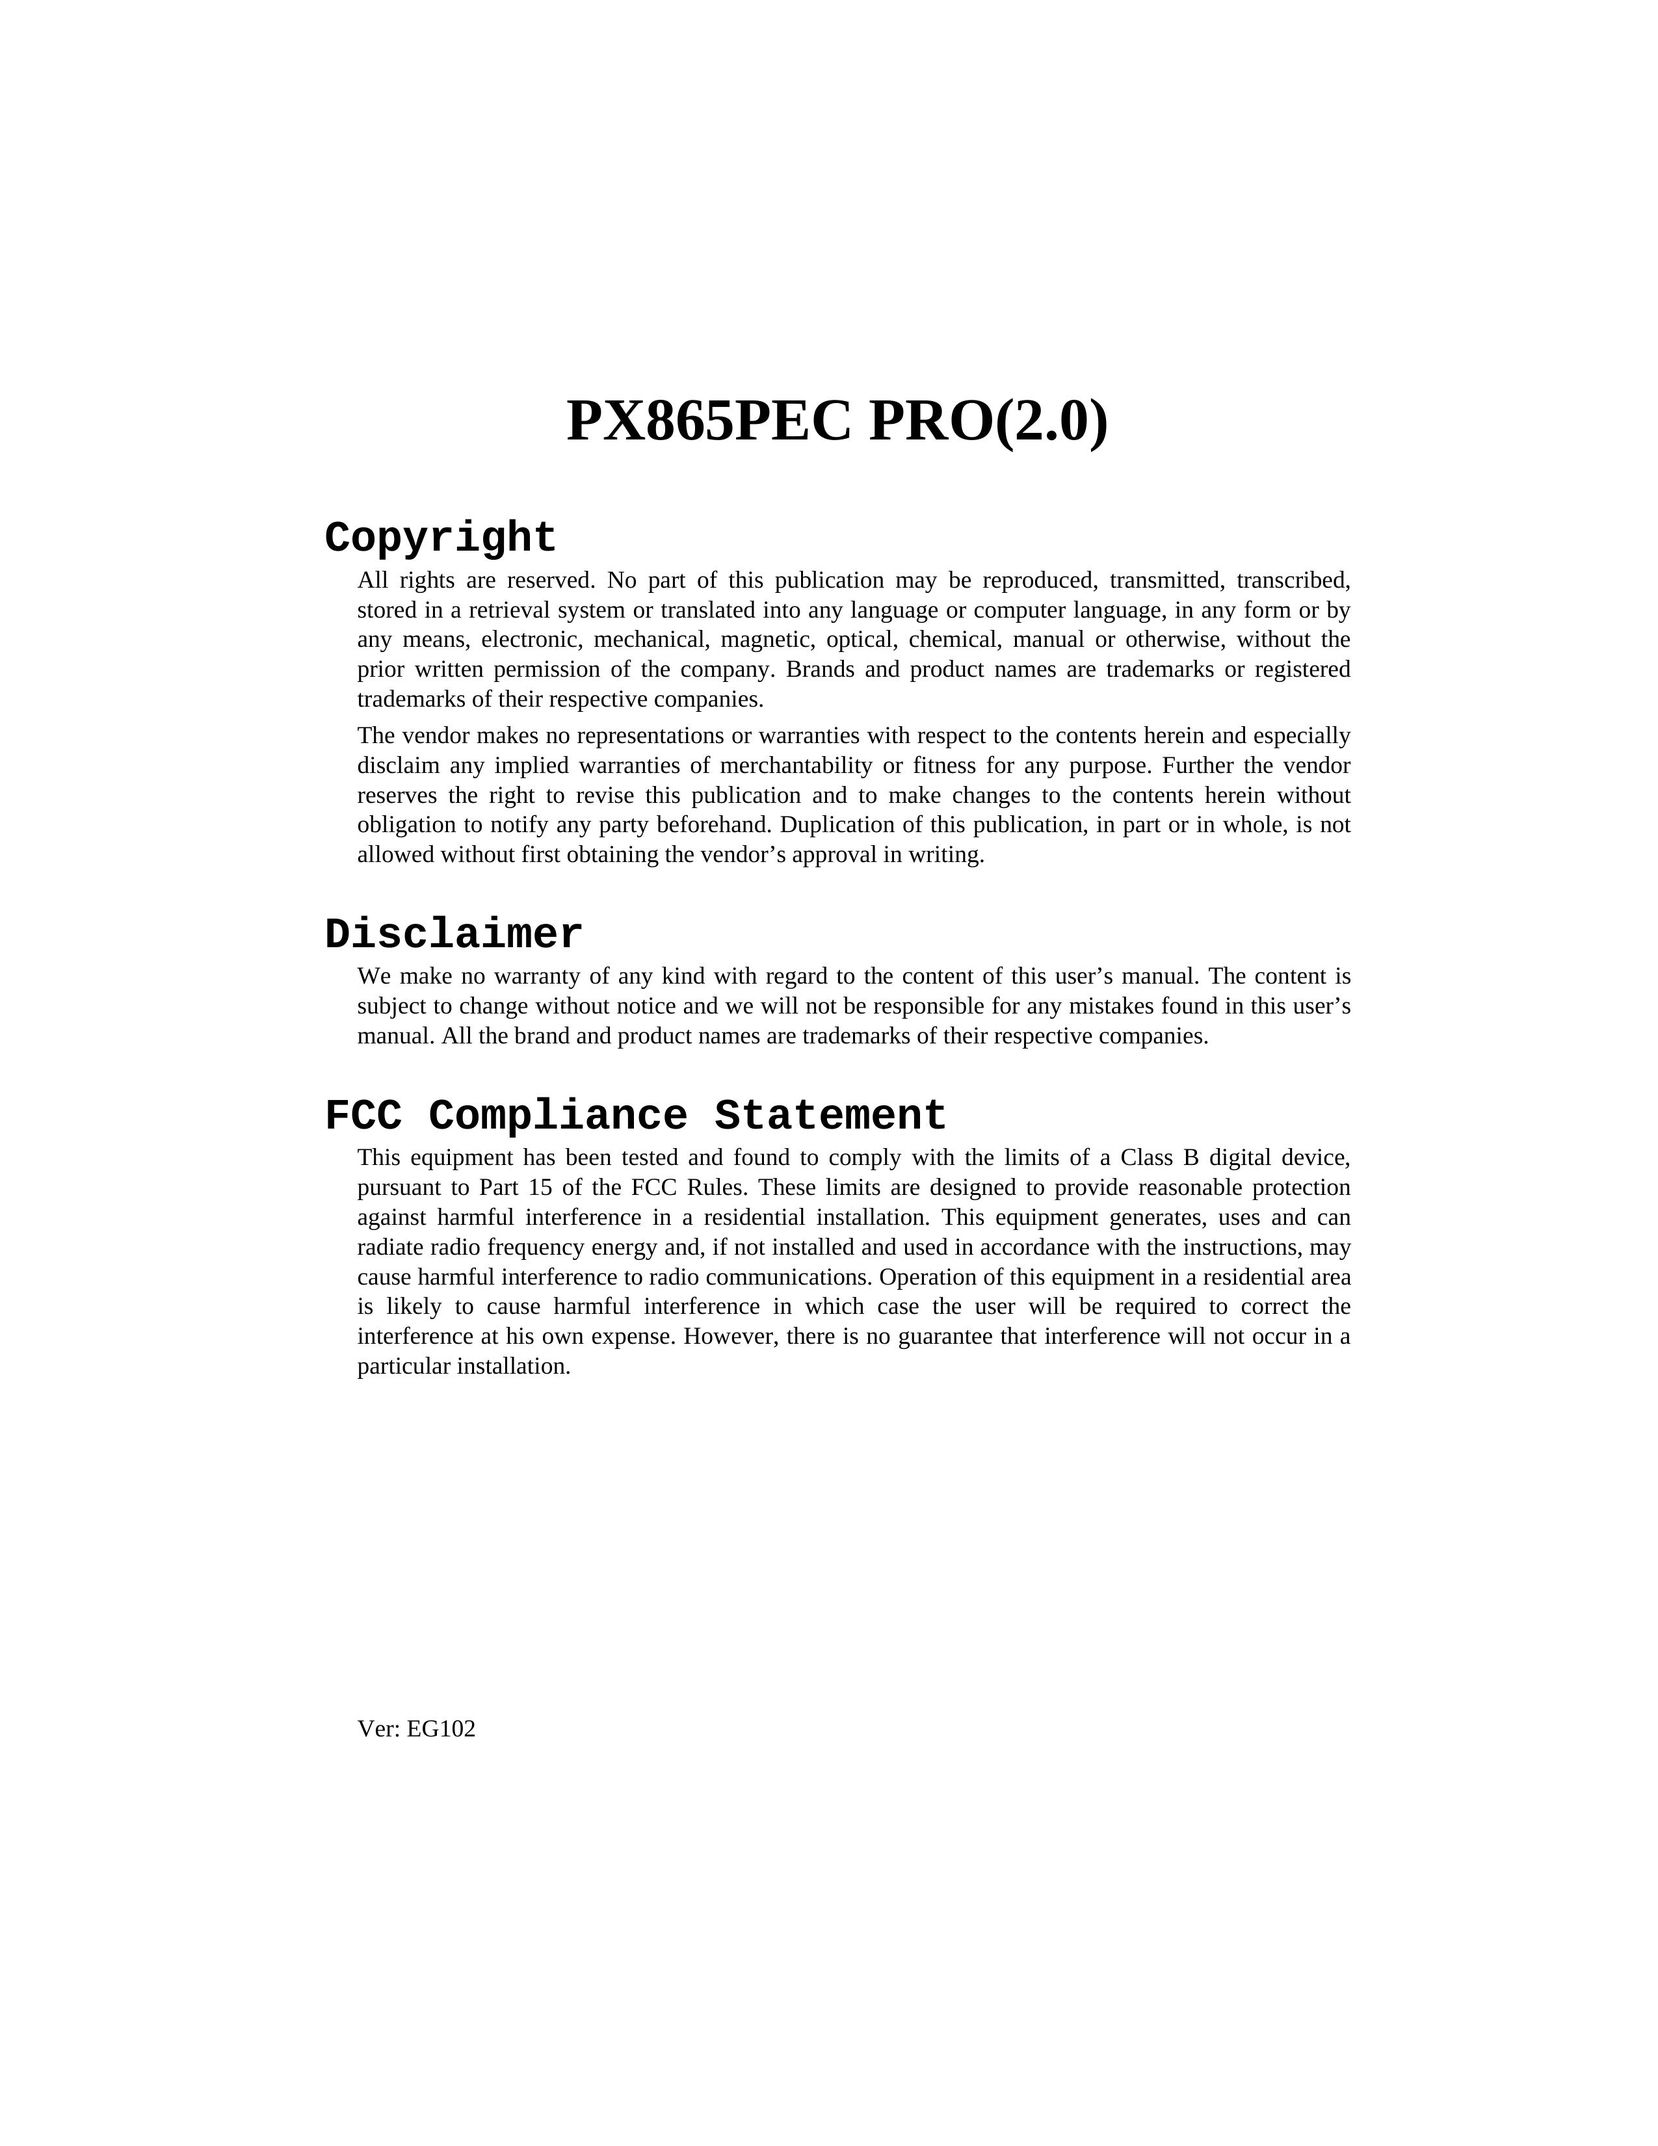 Albatron Technology PX865PEC Computer Hardware User Manual